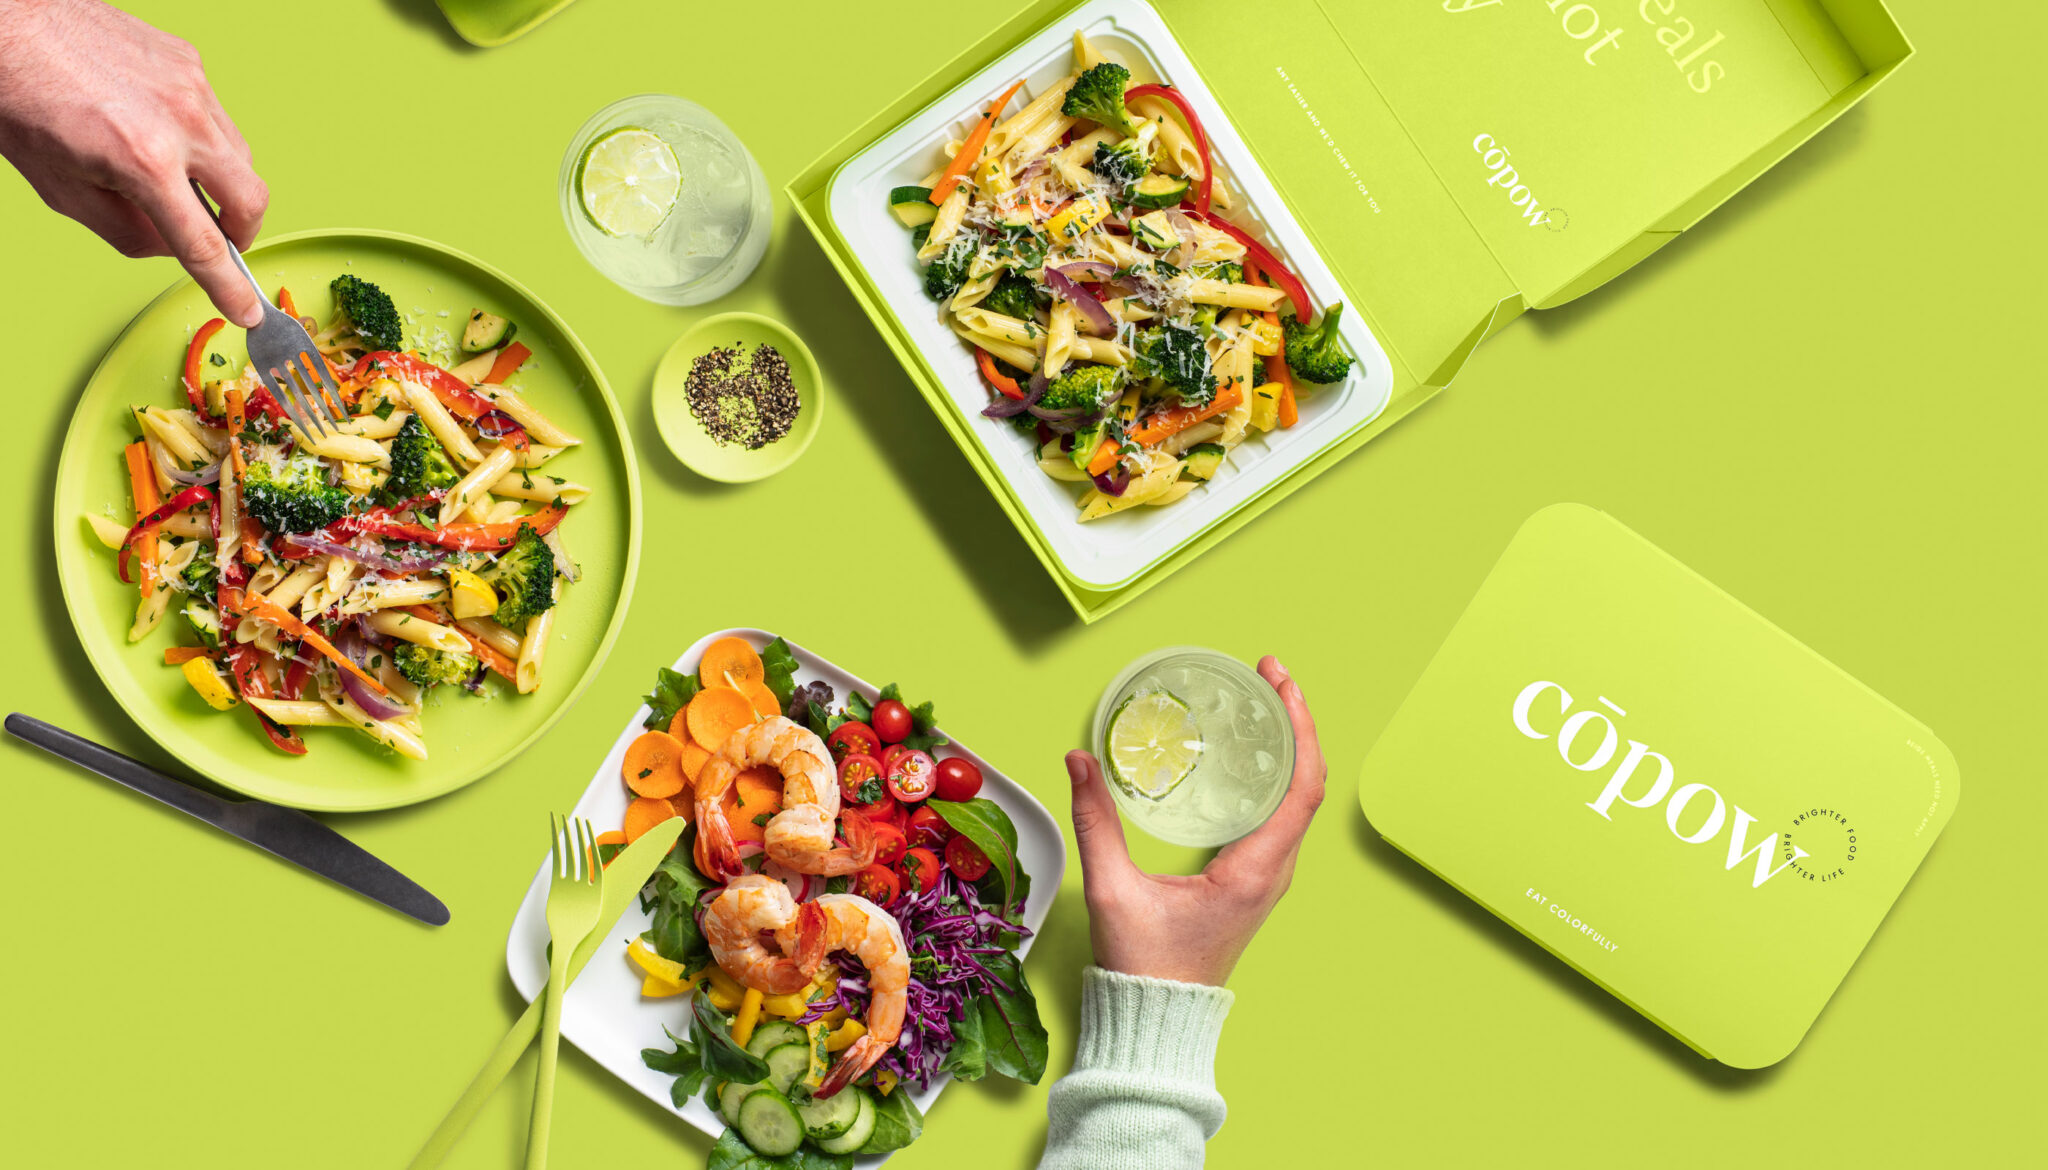 copow-meal-delivery-website-branding-packaging-design-1-scaled.jpg